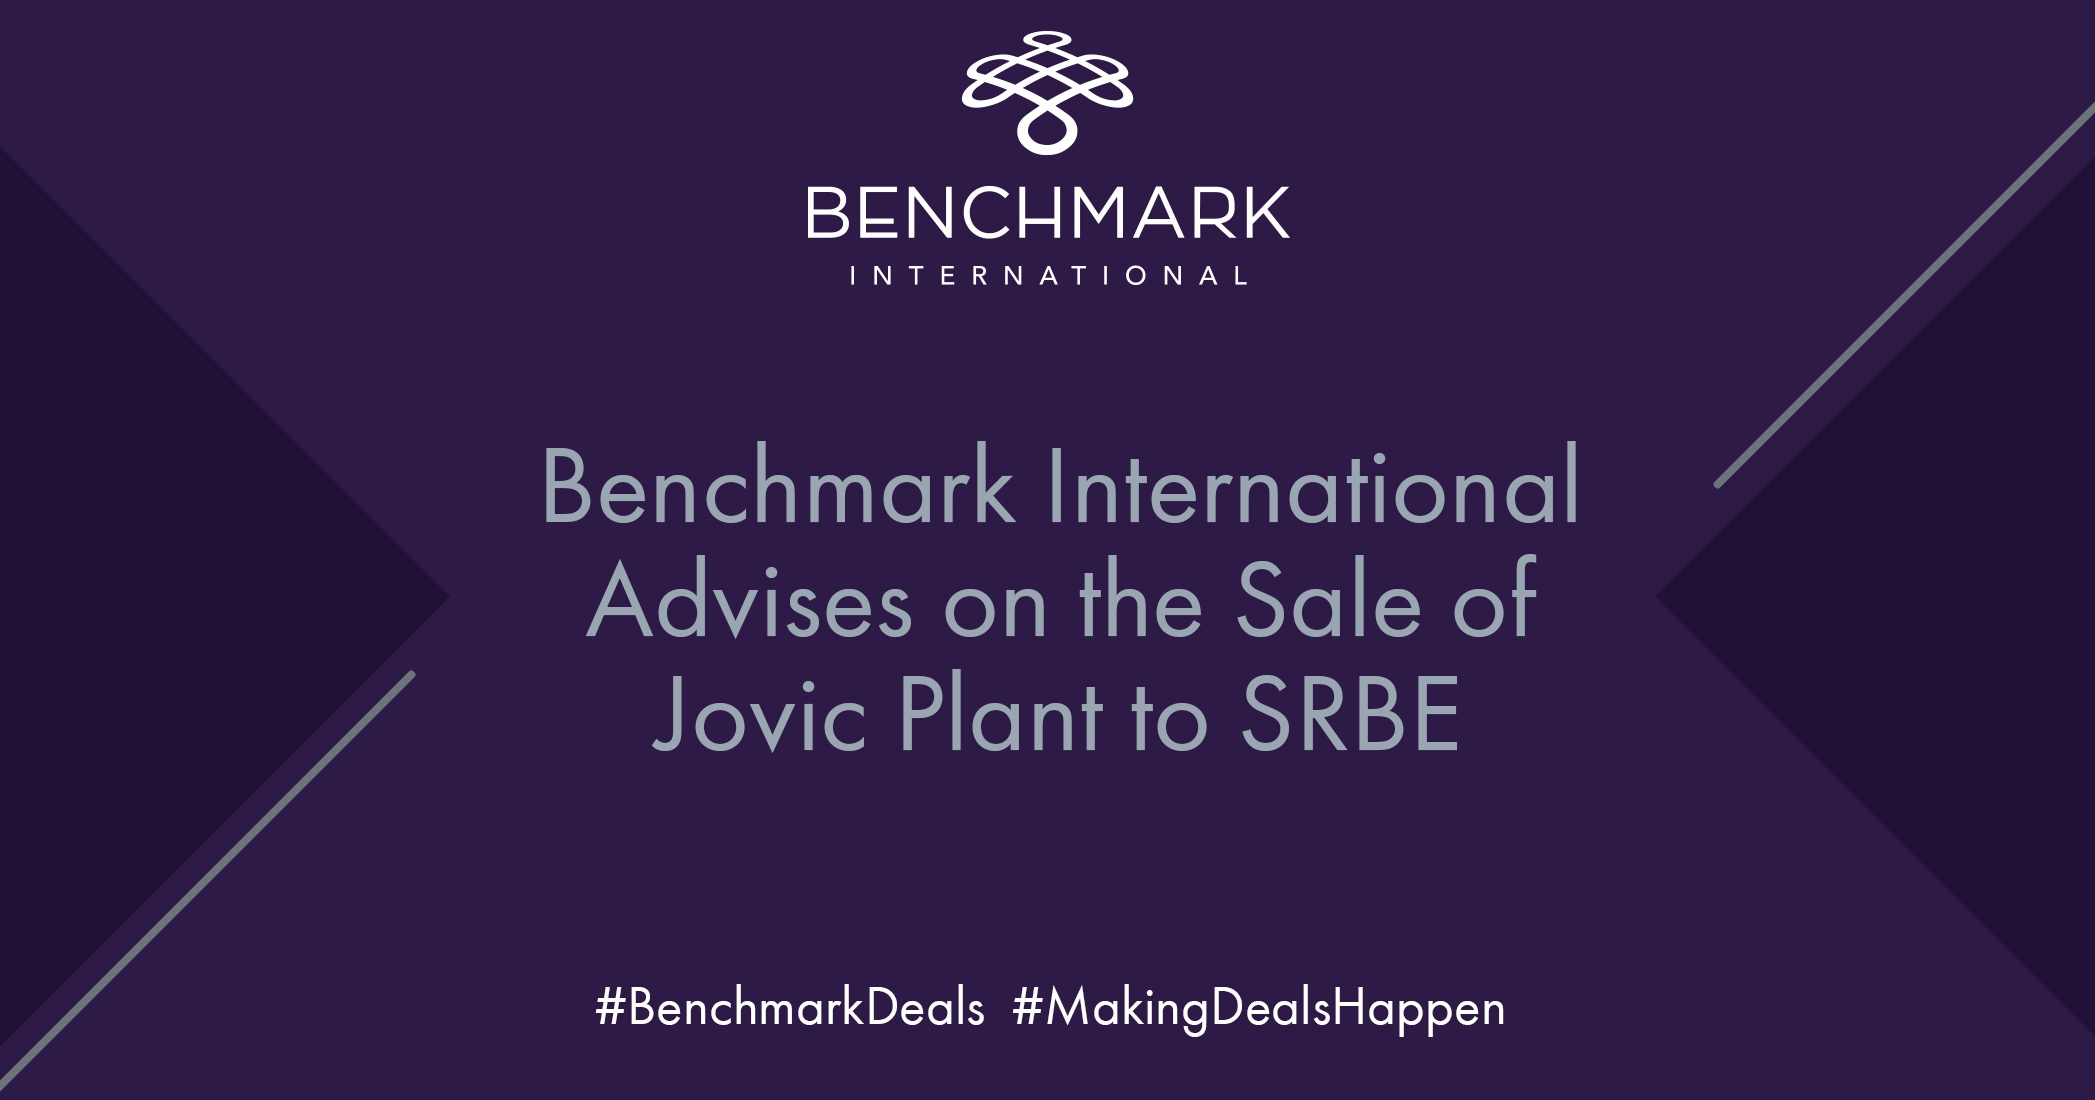 Benchmark International Advises on the Sale of Jovic Plant to SRBE